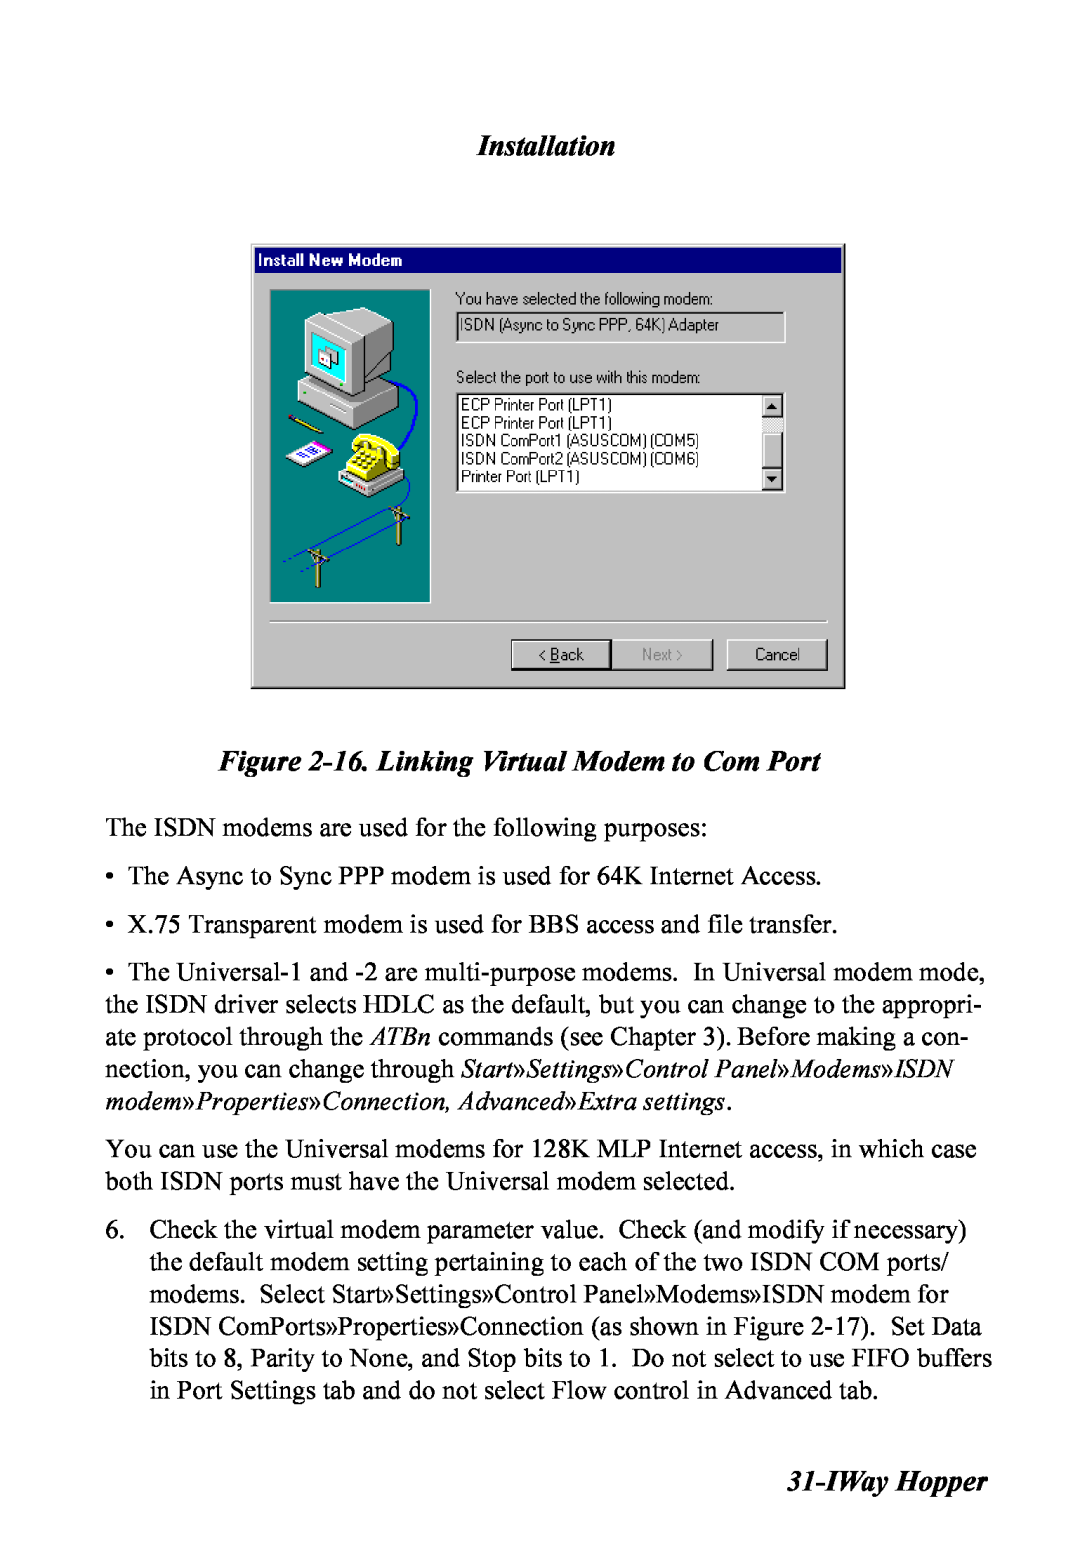 Multitech MT128ISA-UD, MT128ISA-SD, MT128ISA-SV manual Installation -16. Linking Virtual Modem to Com Port, IWay Hopper 